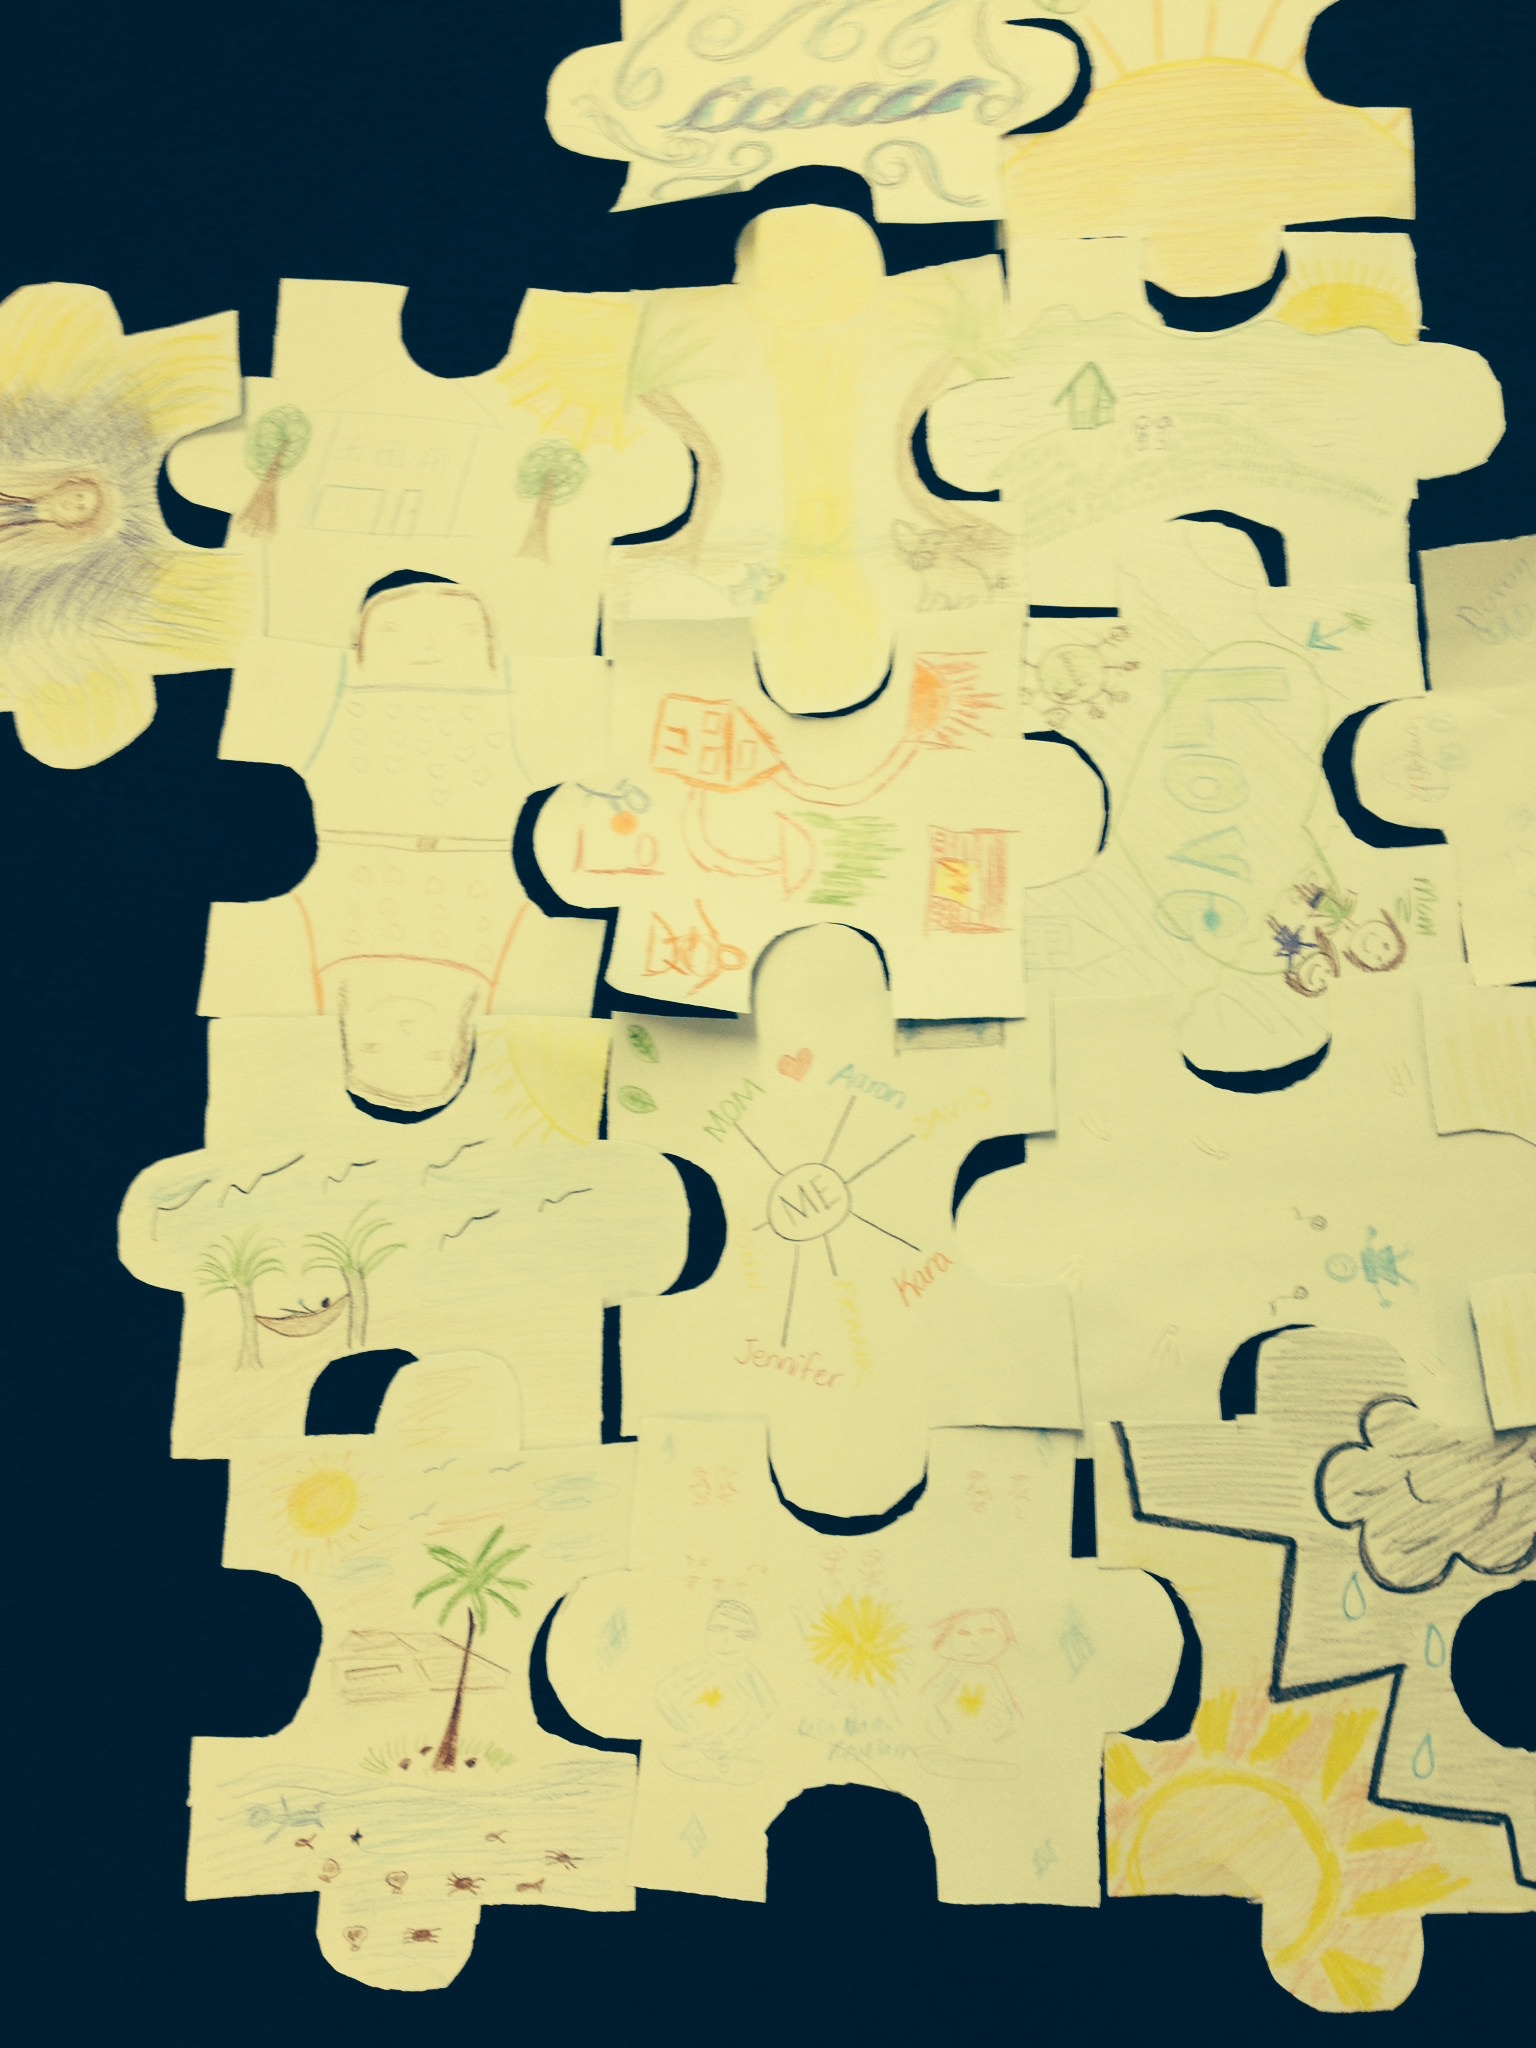 teacher circle puzzle activity